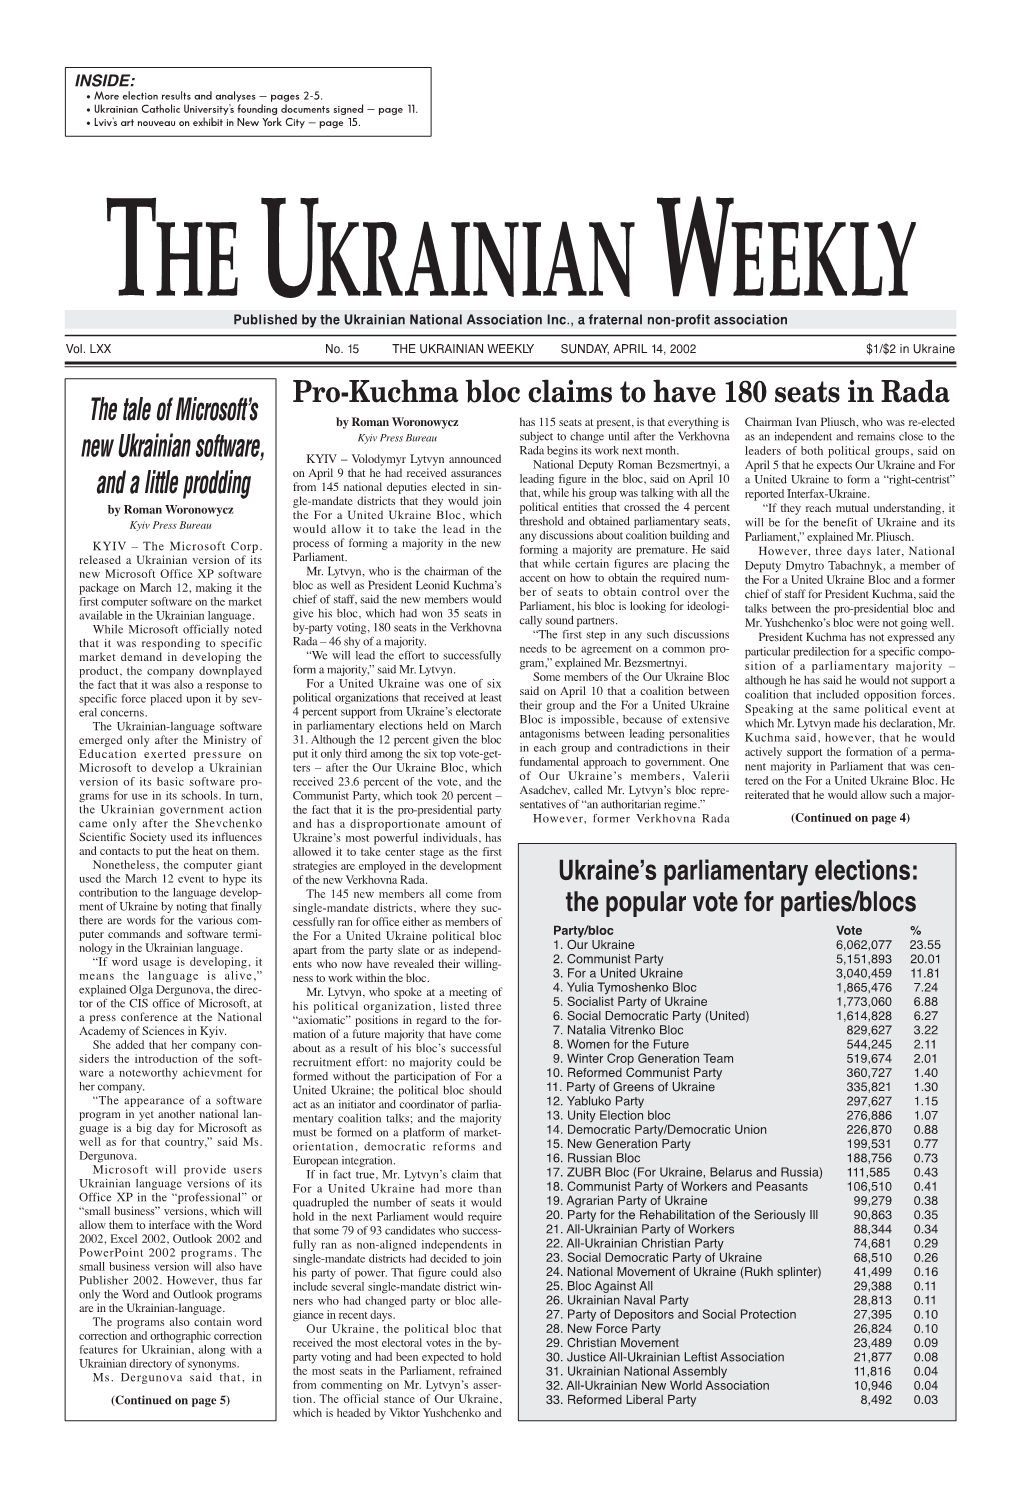 The Ukrainian Weekly 2002-15.Pdf